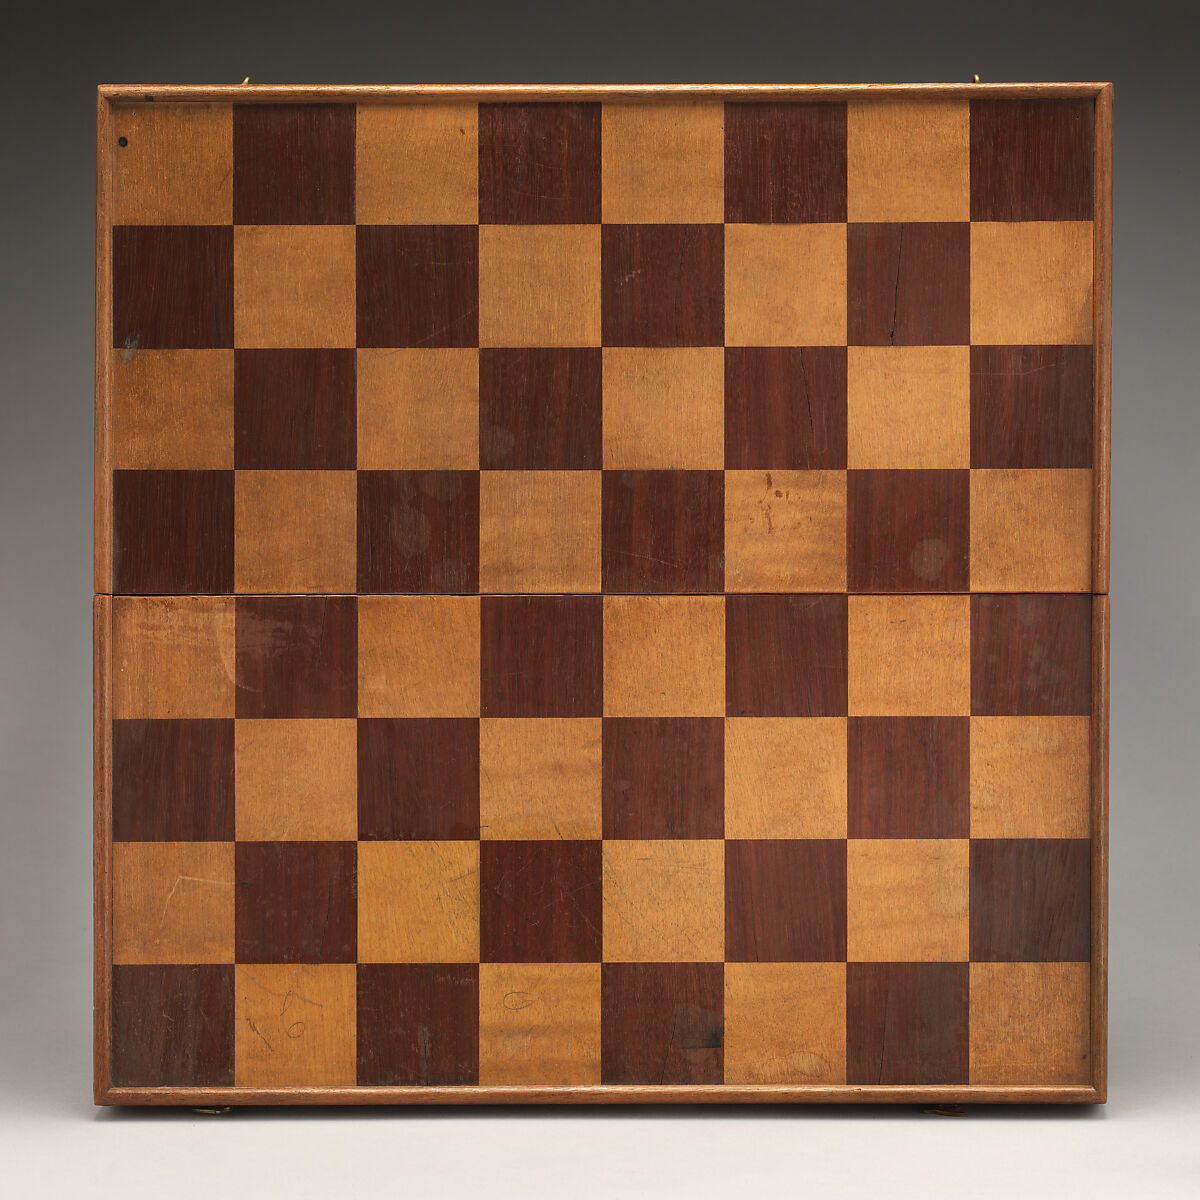 Box-board, Wood, British or German 